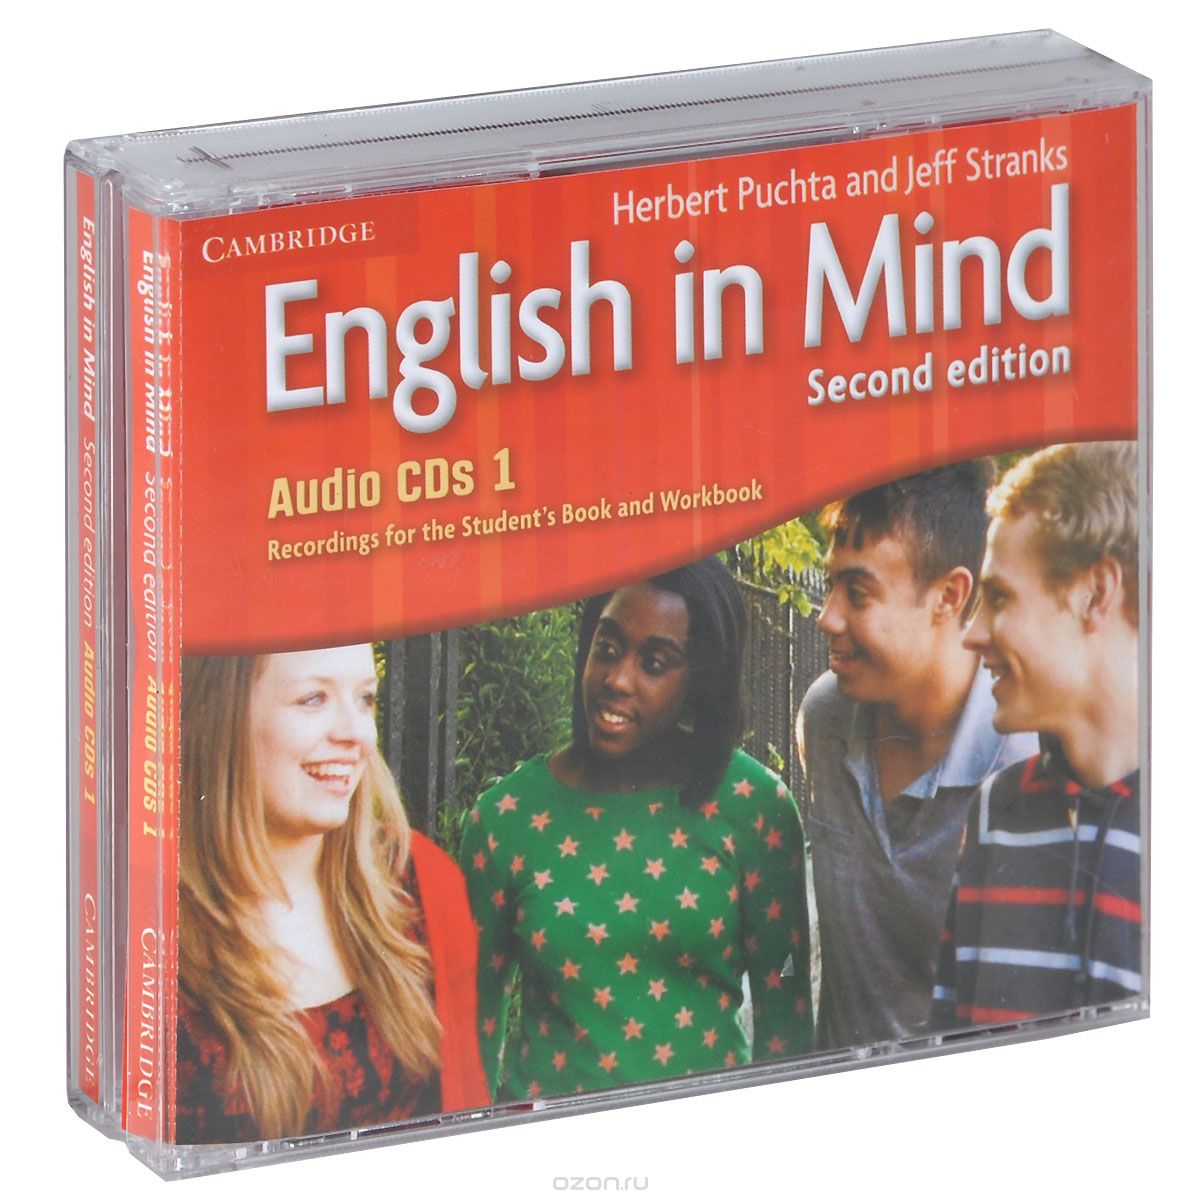 Скачать книгу "English in Mind: Level 1 (аудиокурс на 3 CD)"